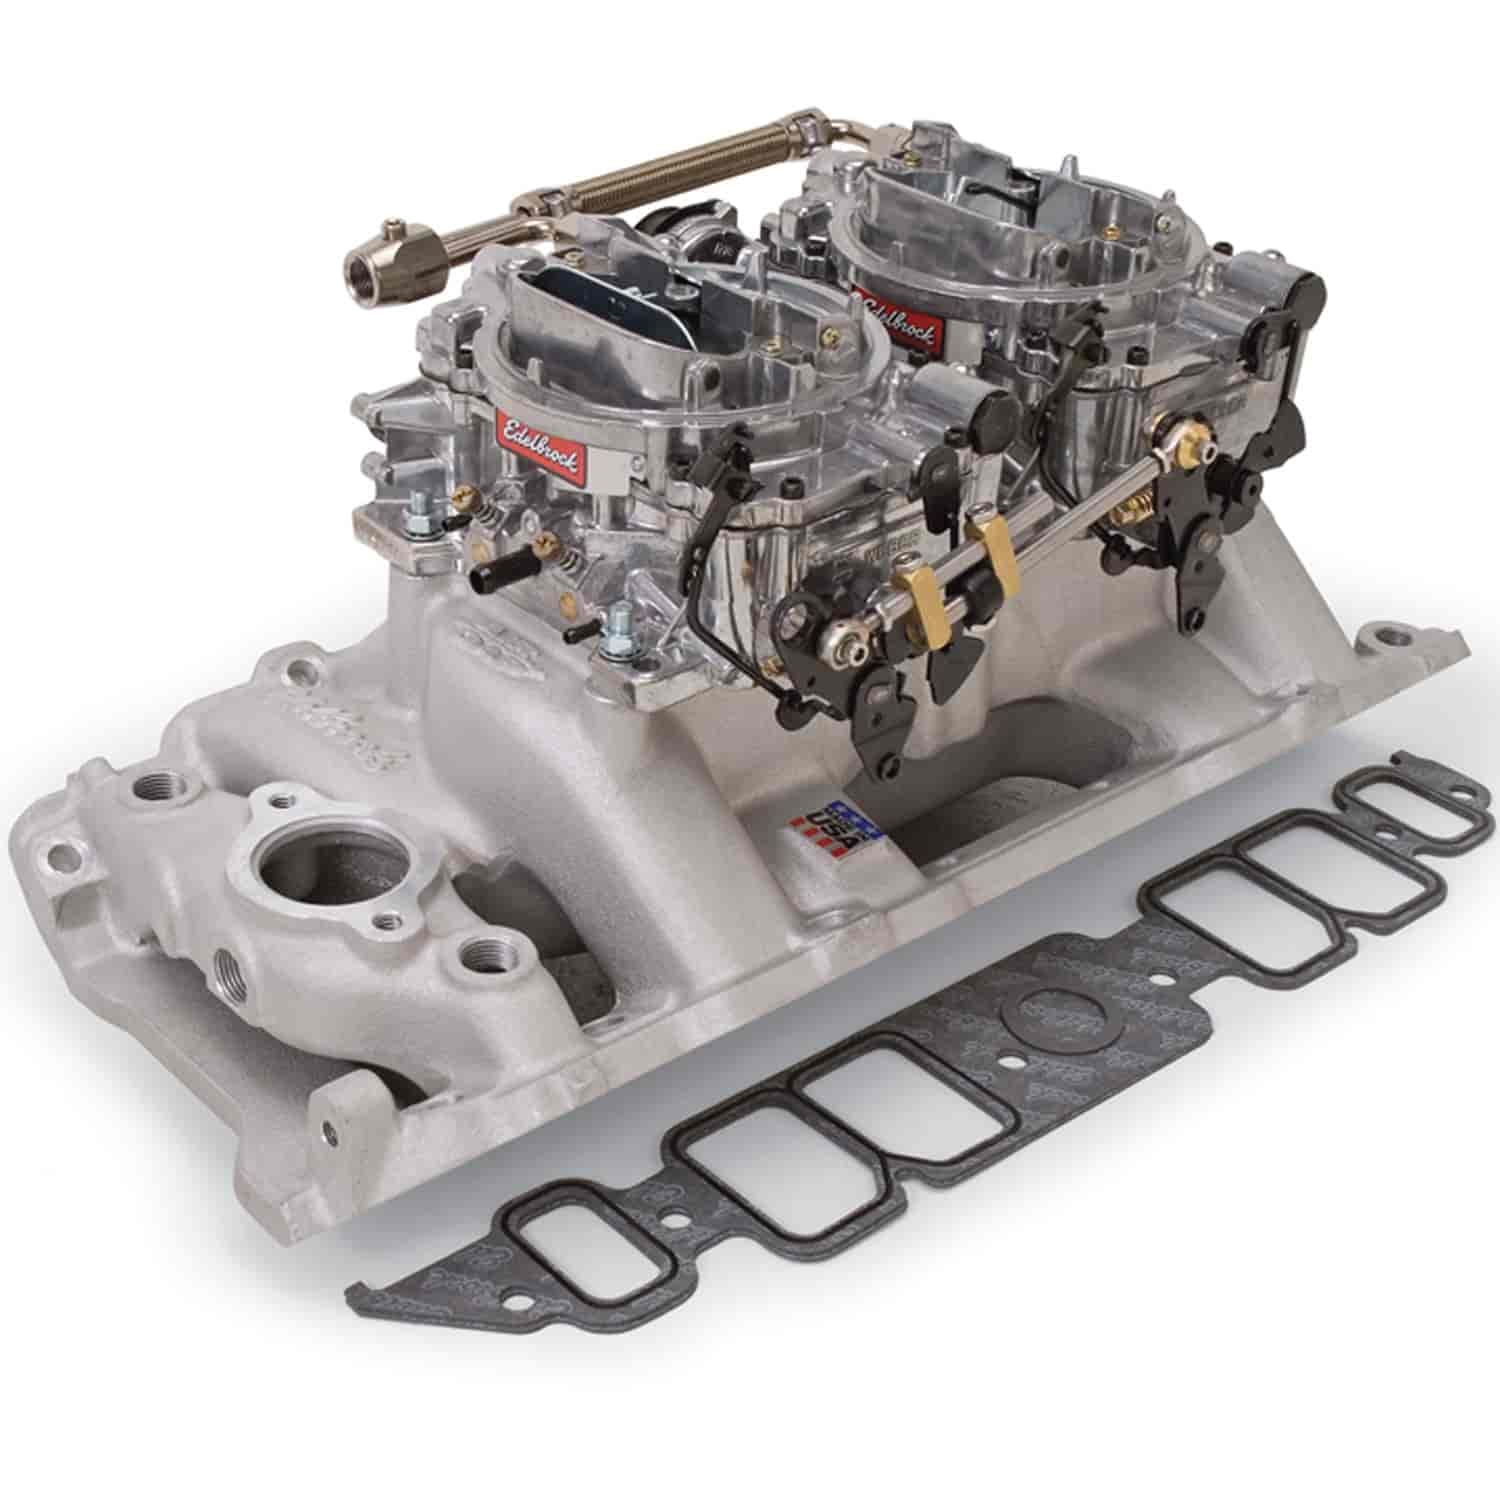 RPM Dual-Quad Manifold and Carburetor Kit for Big Block Chevy Rectangle Port